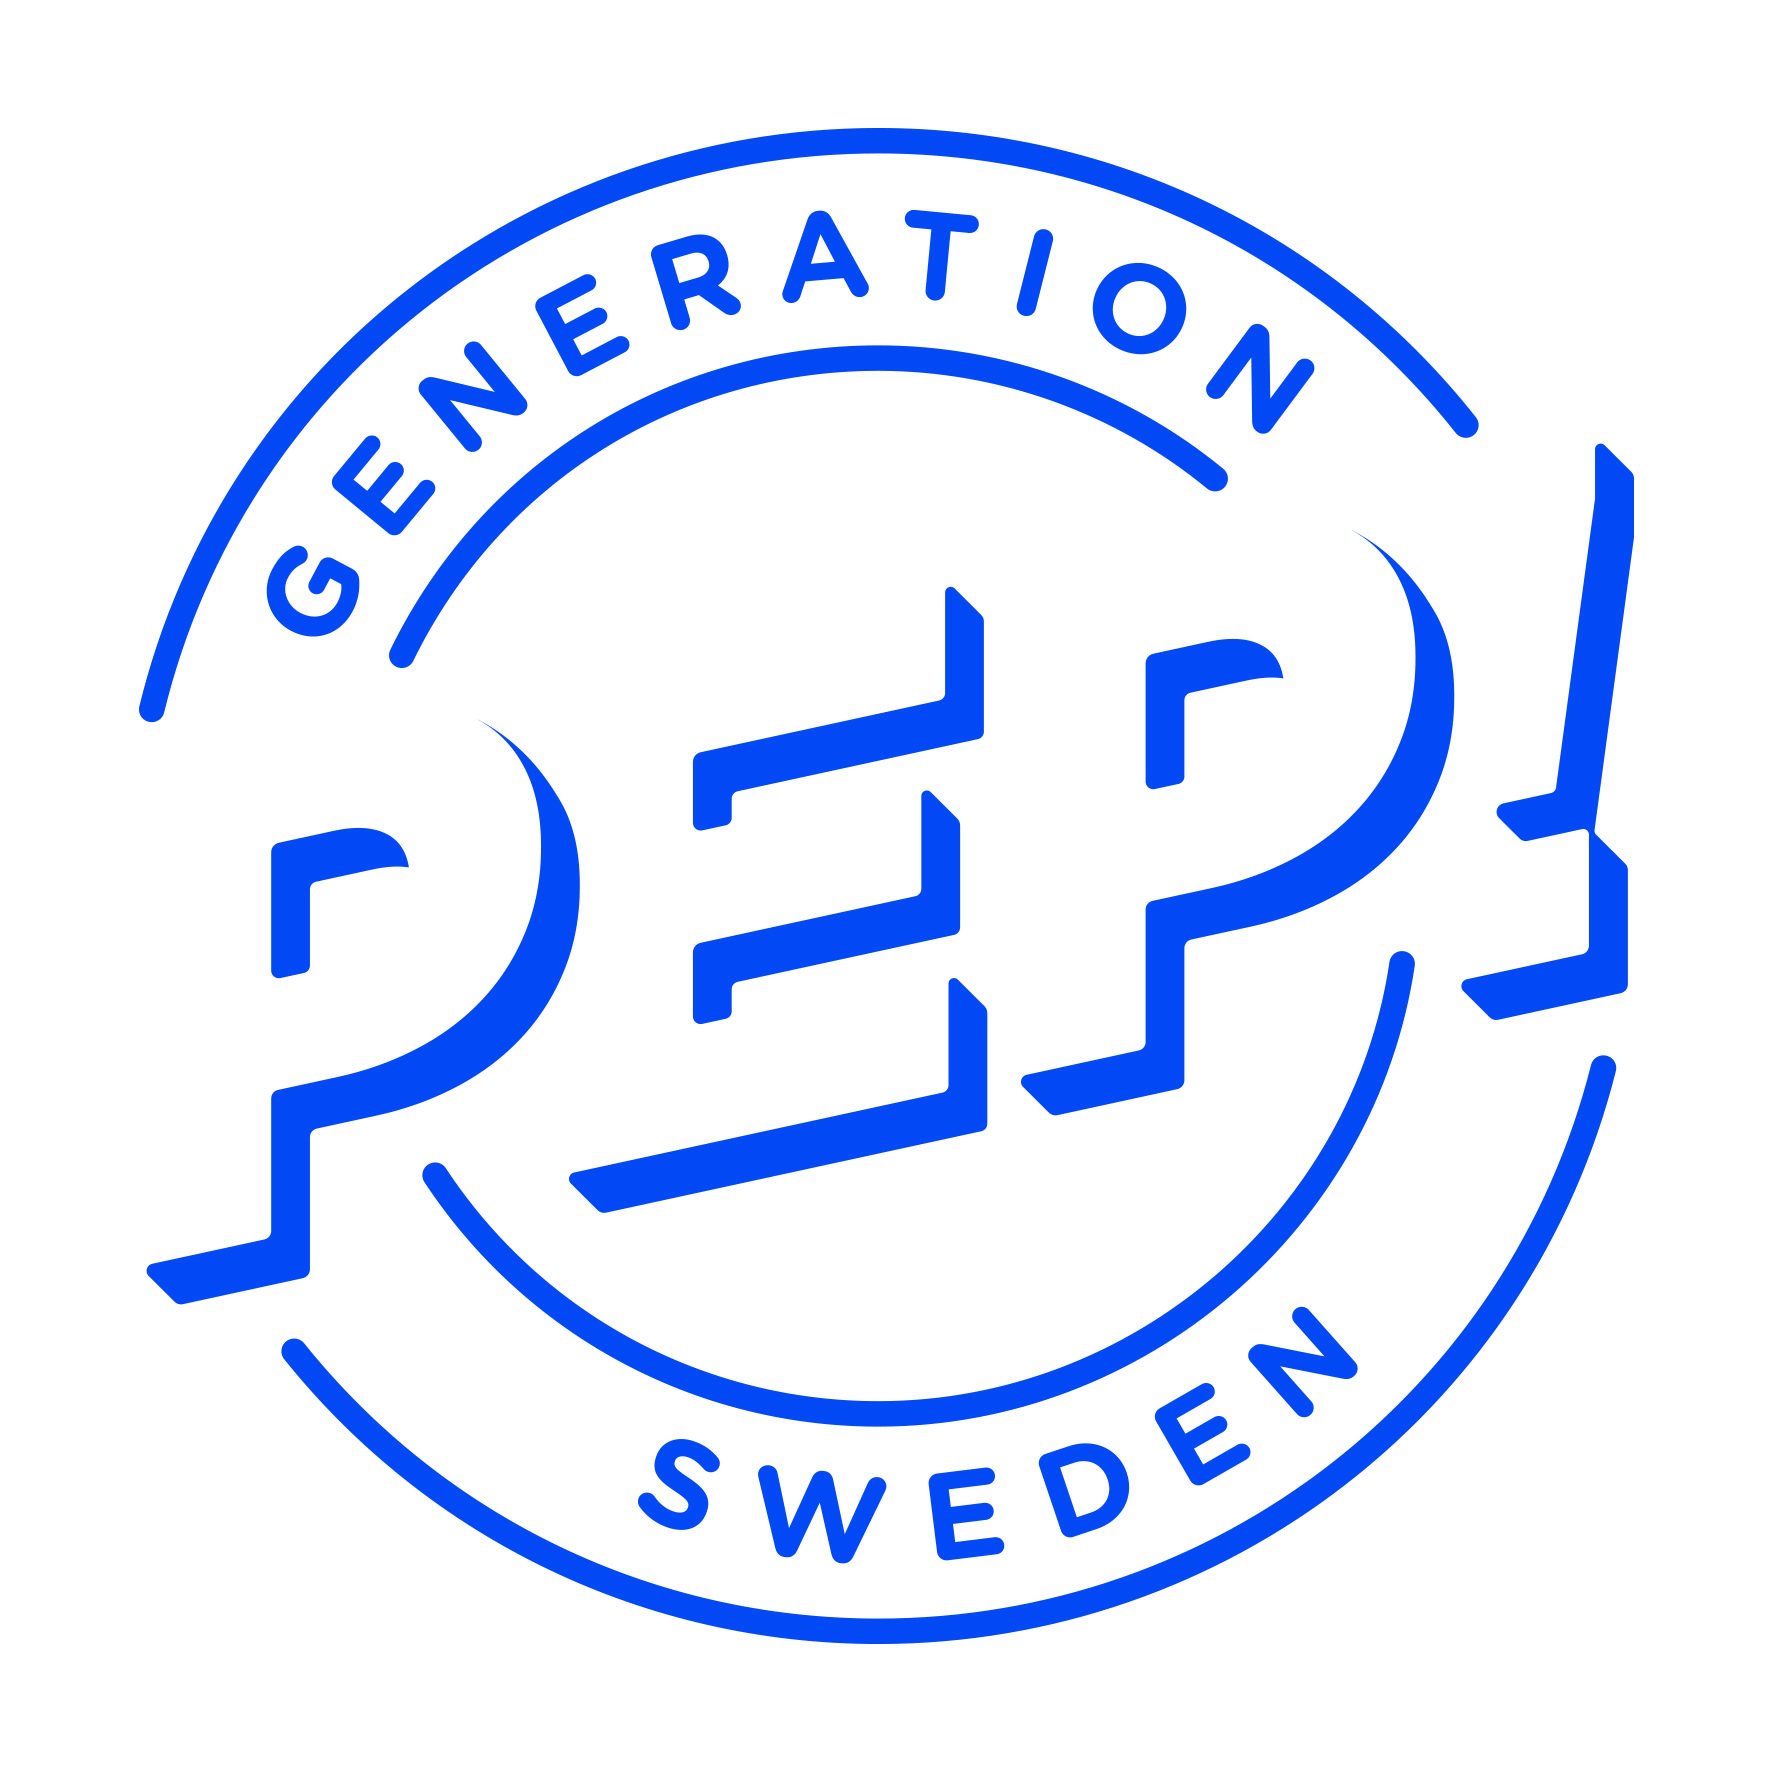 Generation_Pep_Logo_BLUE.jpg